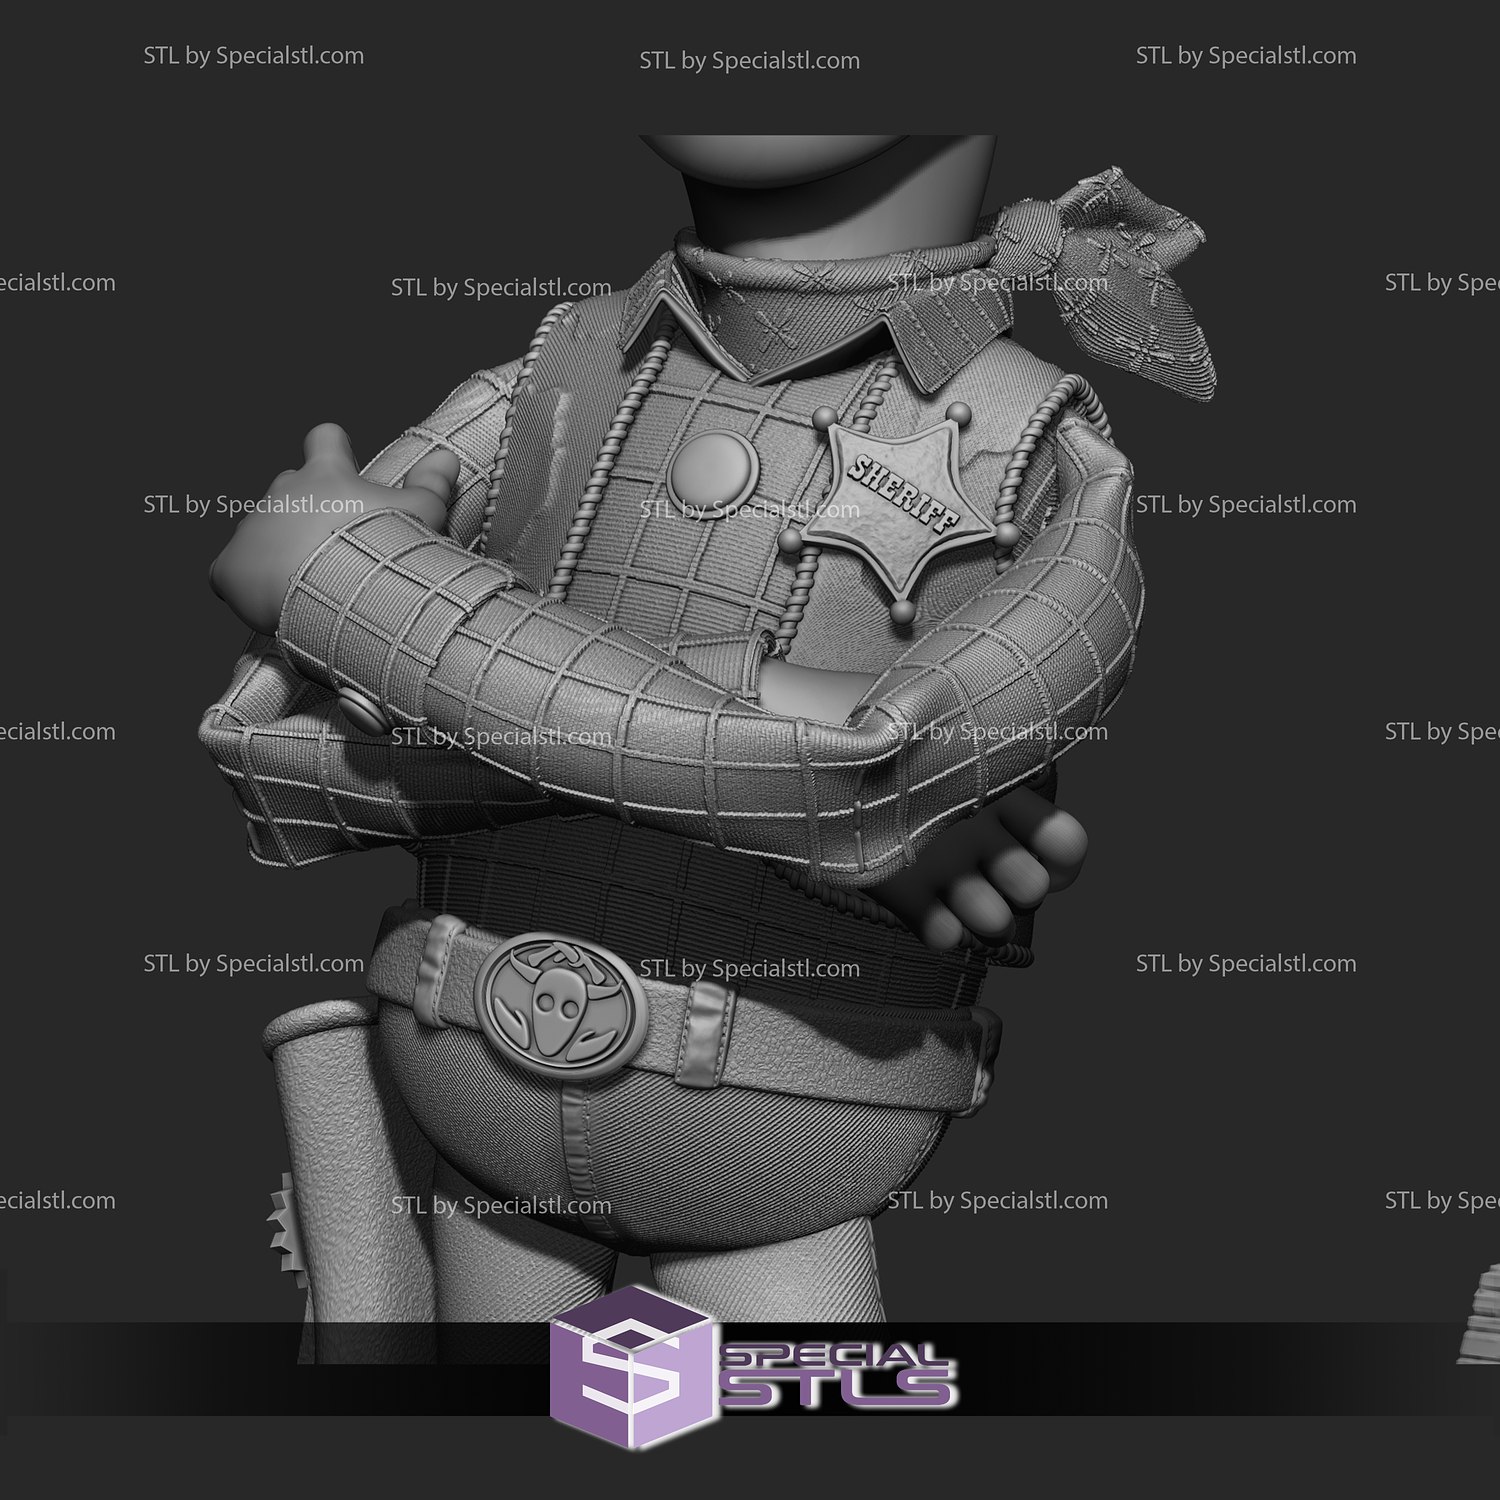 Sheriff Woody Pride 3D Printing Model V2 Toy Story Disney STL Files